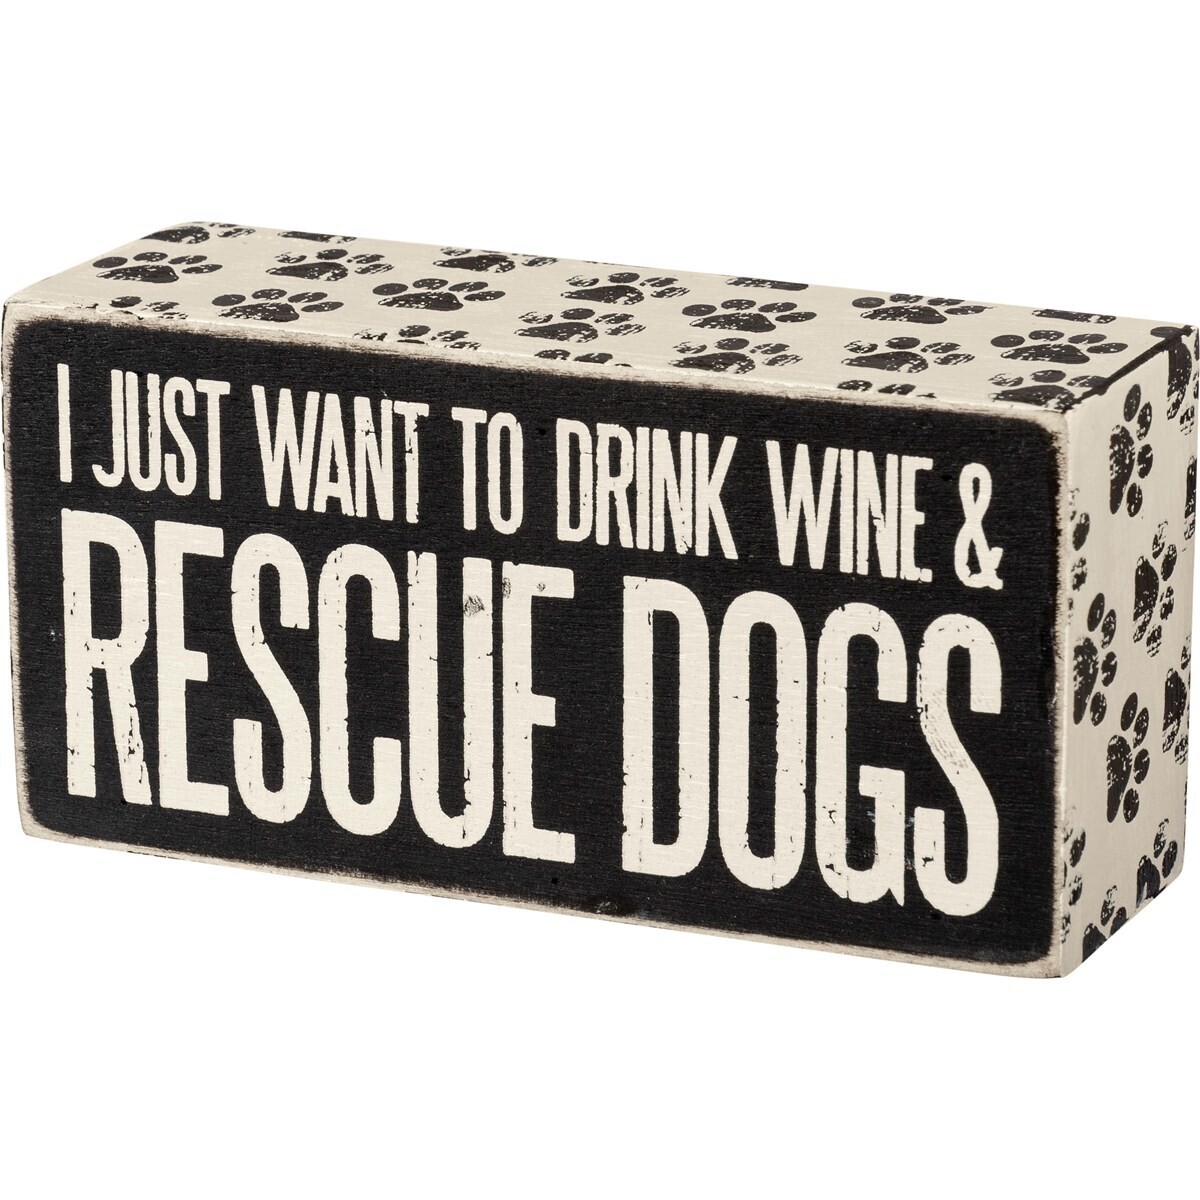 Rescue Dogs Box Sign